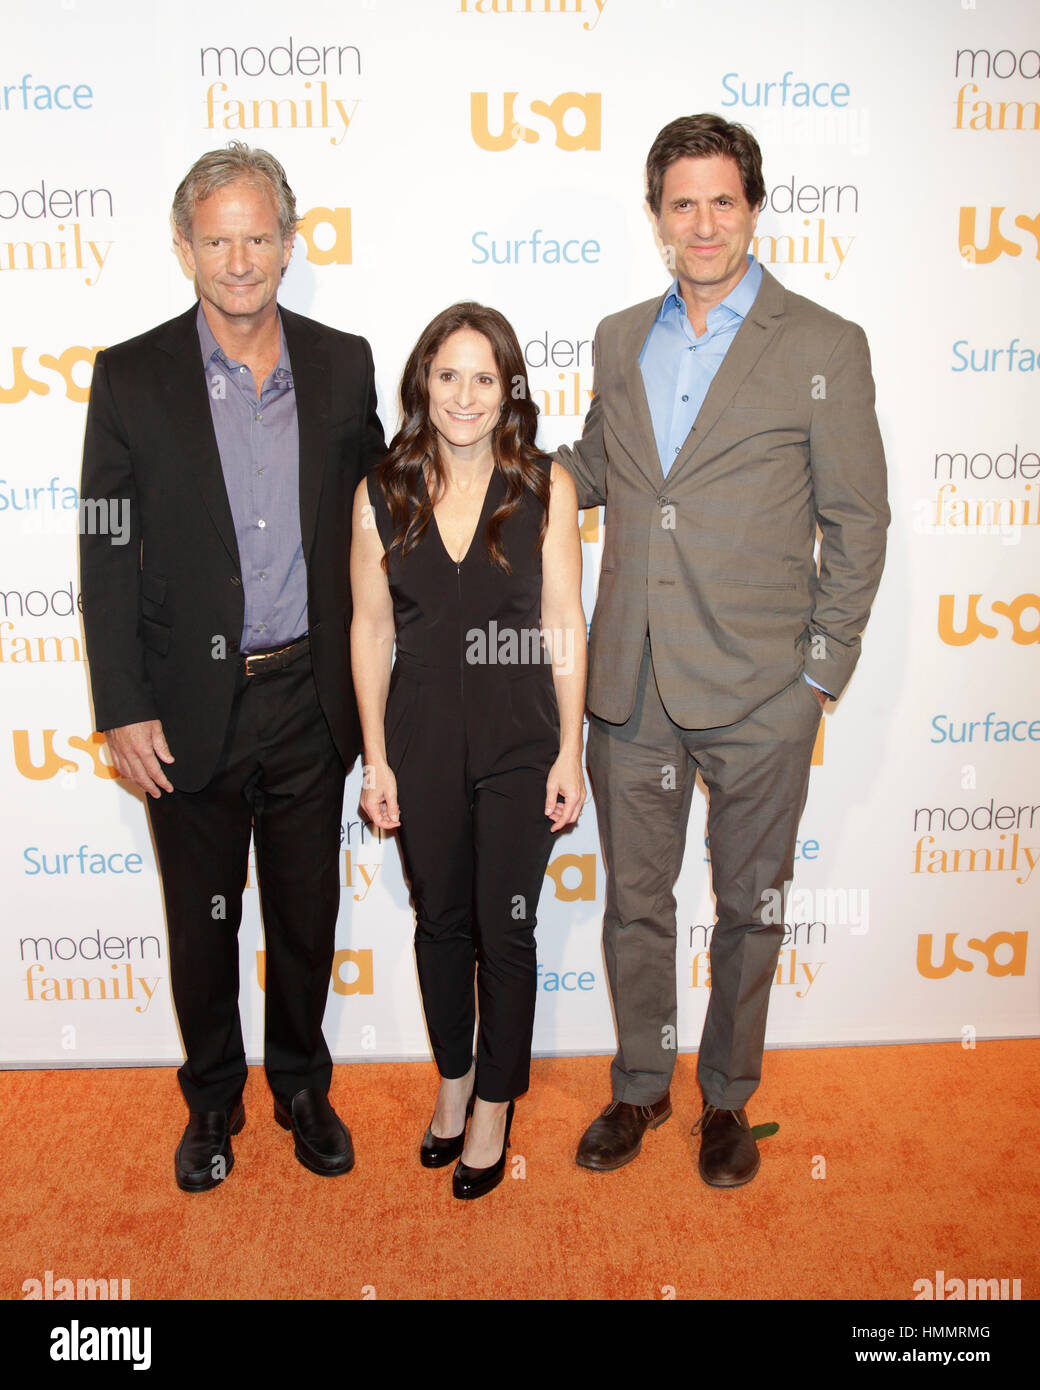 Chris Lloyd, left, Alexandra Shapiro, center, and Steve Levitan arrive at  the USA Network Modern Family